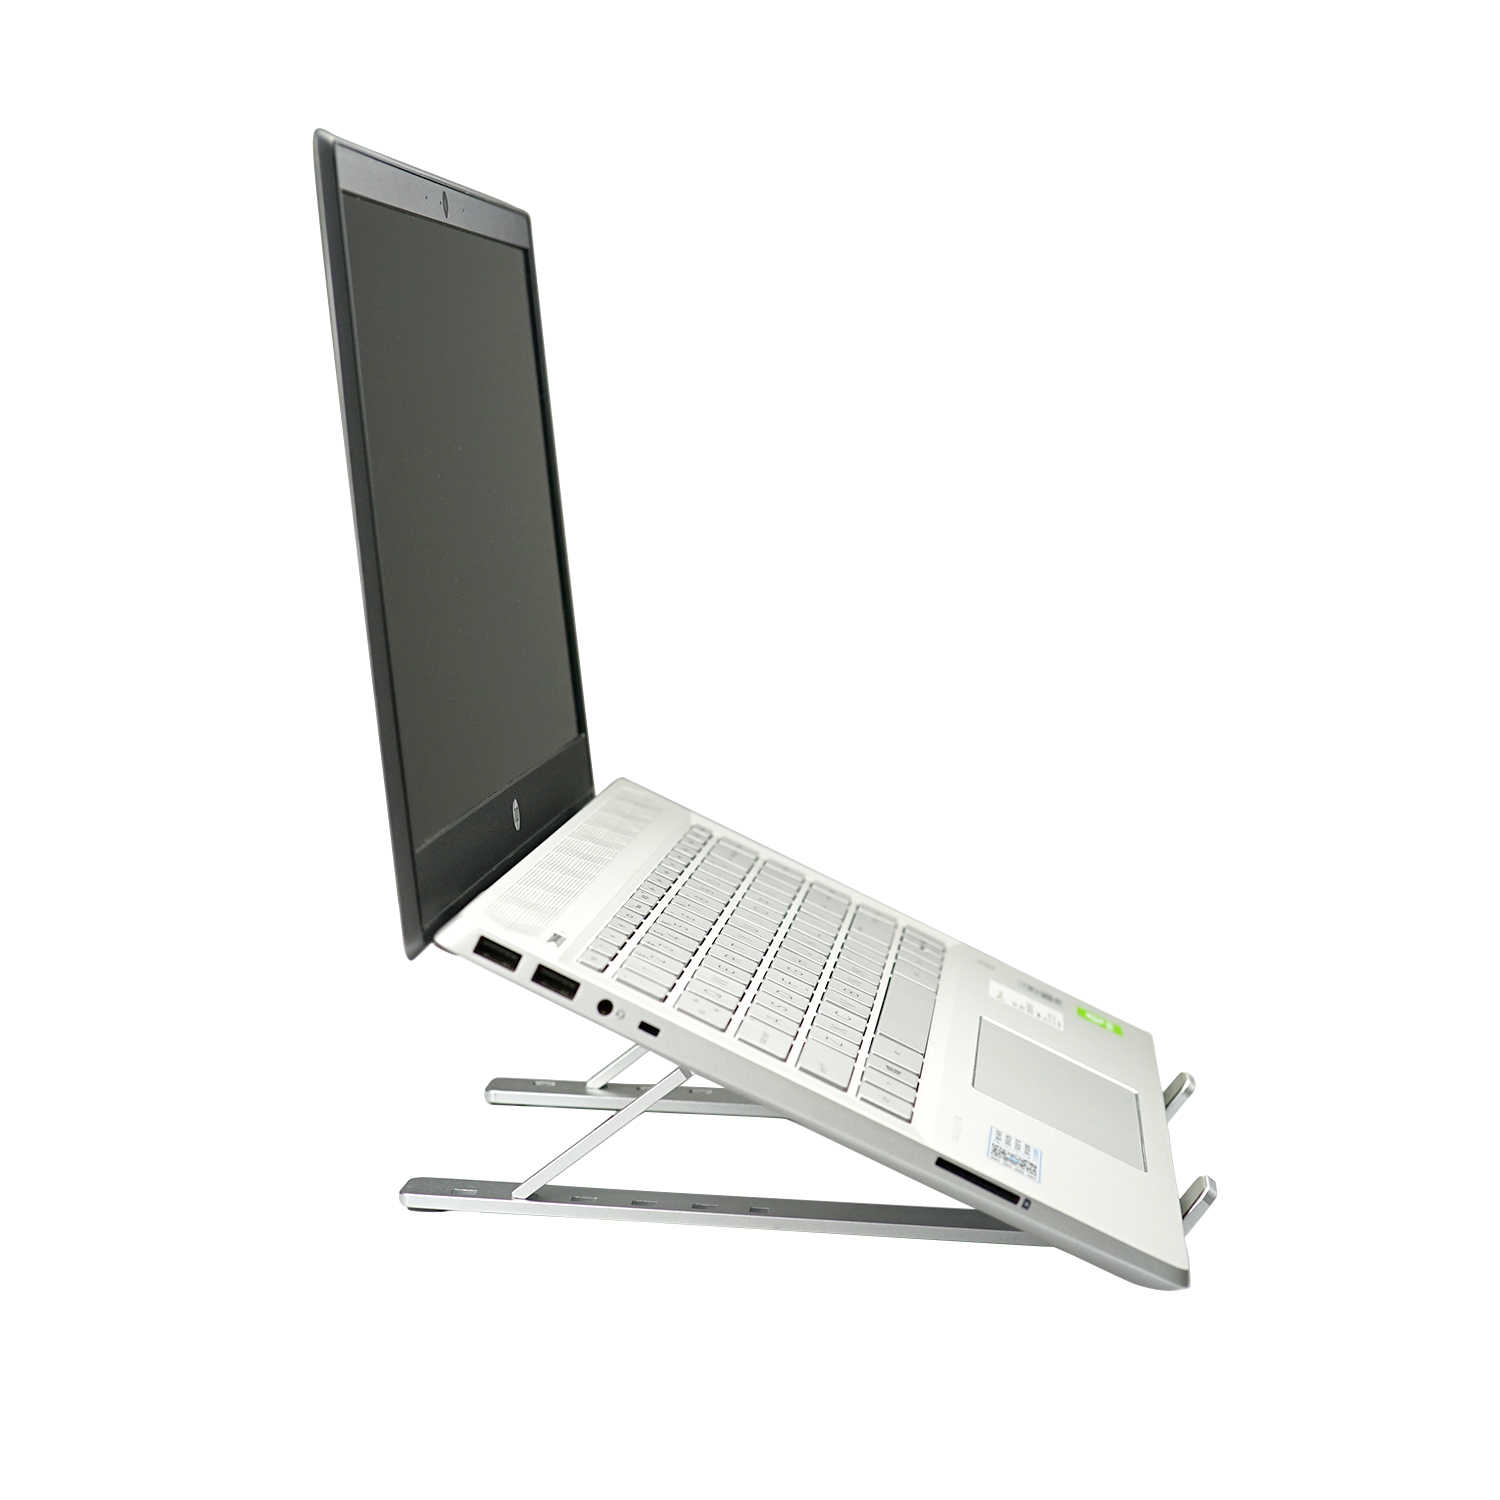 Soporte de computadora portátil de escritorio de computadora portátil ajustable Soporte portátil portátil portátil portátil